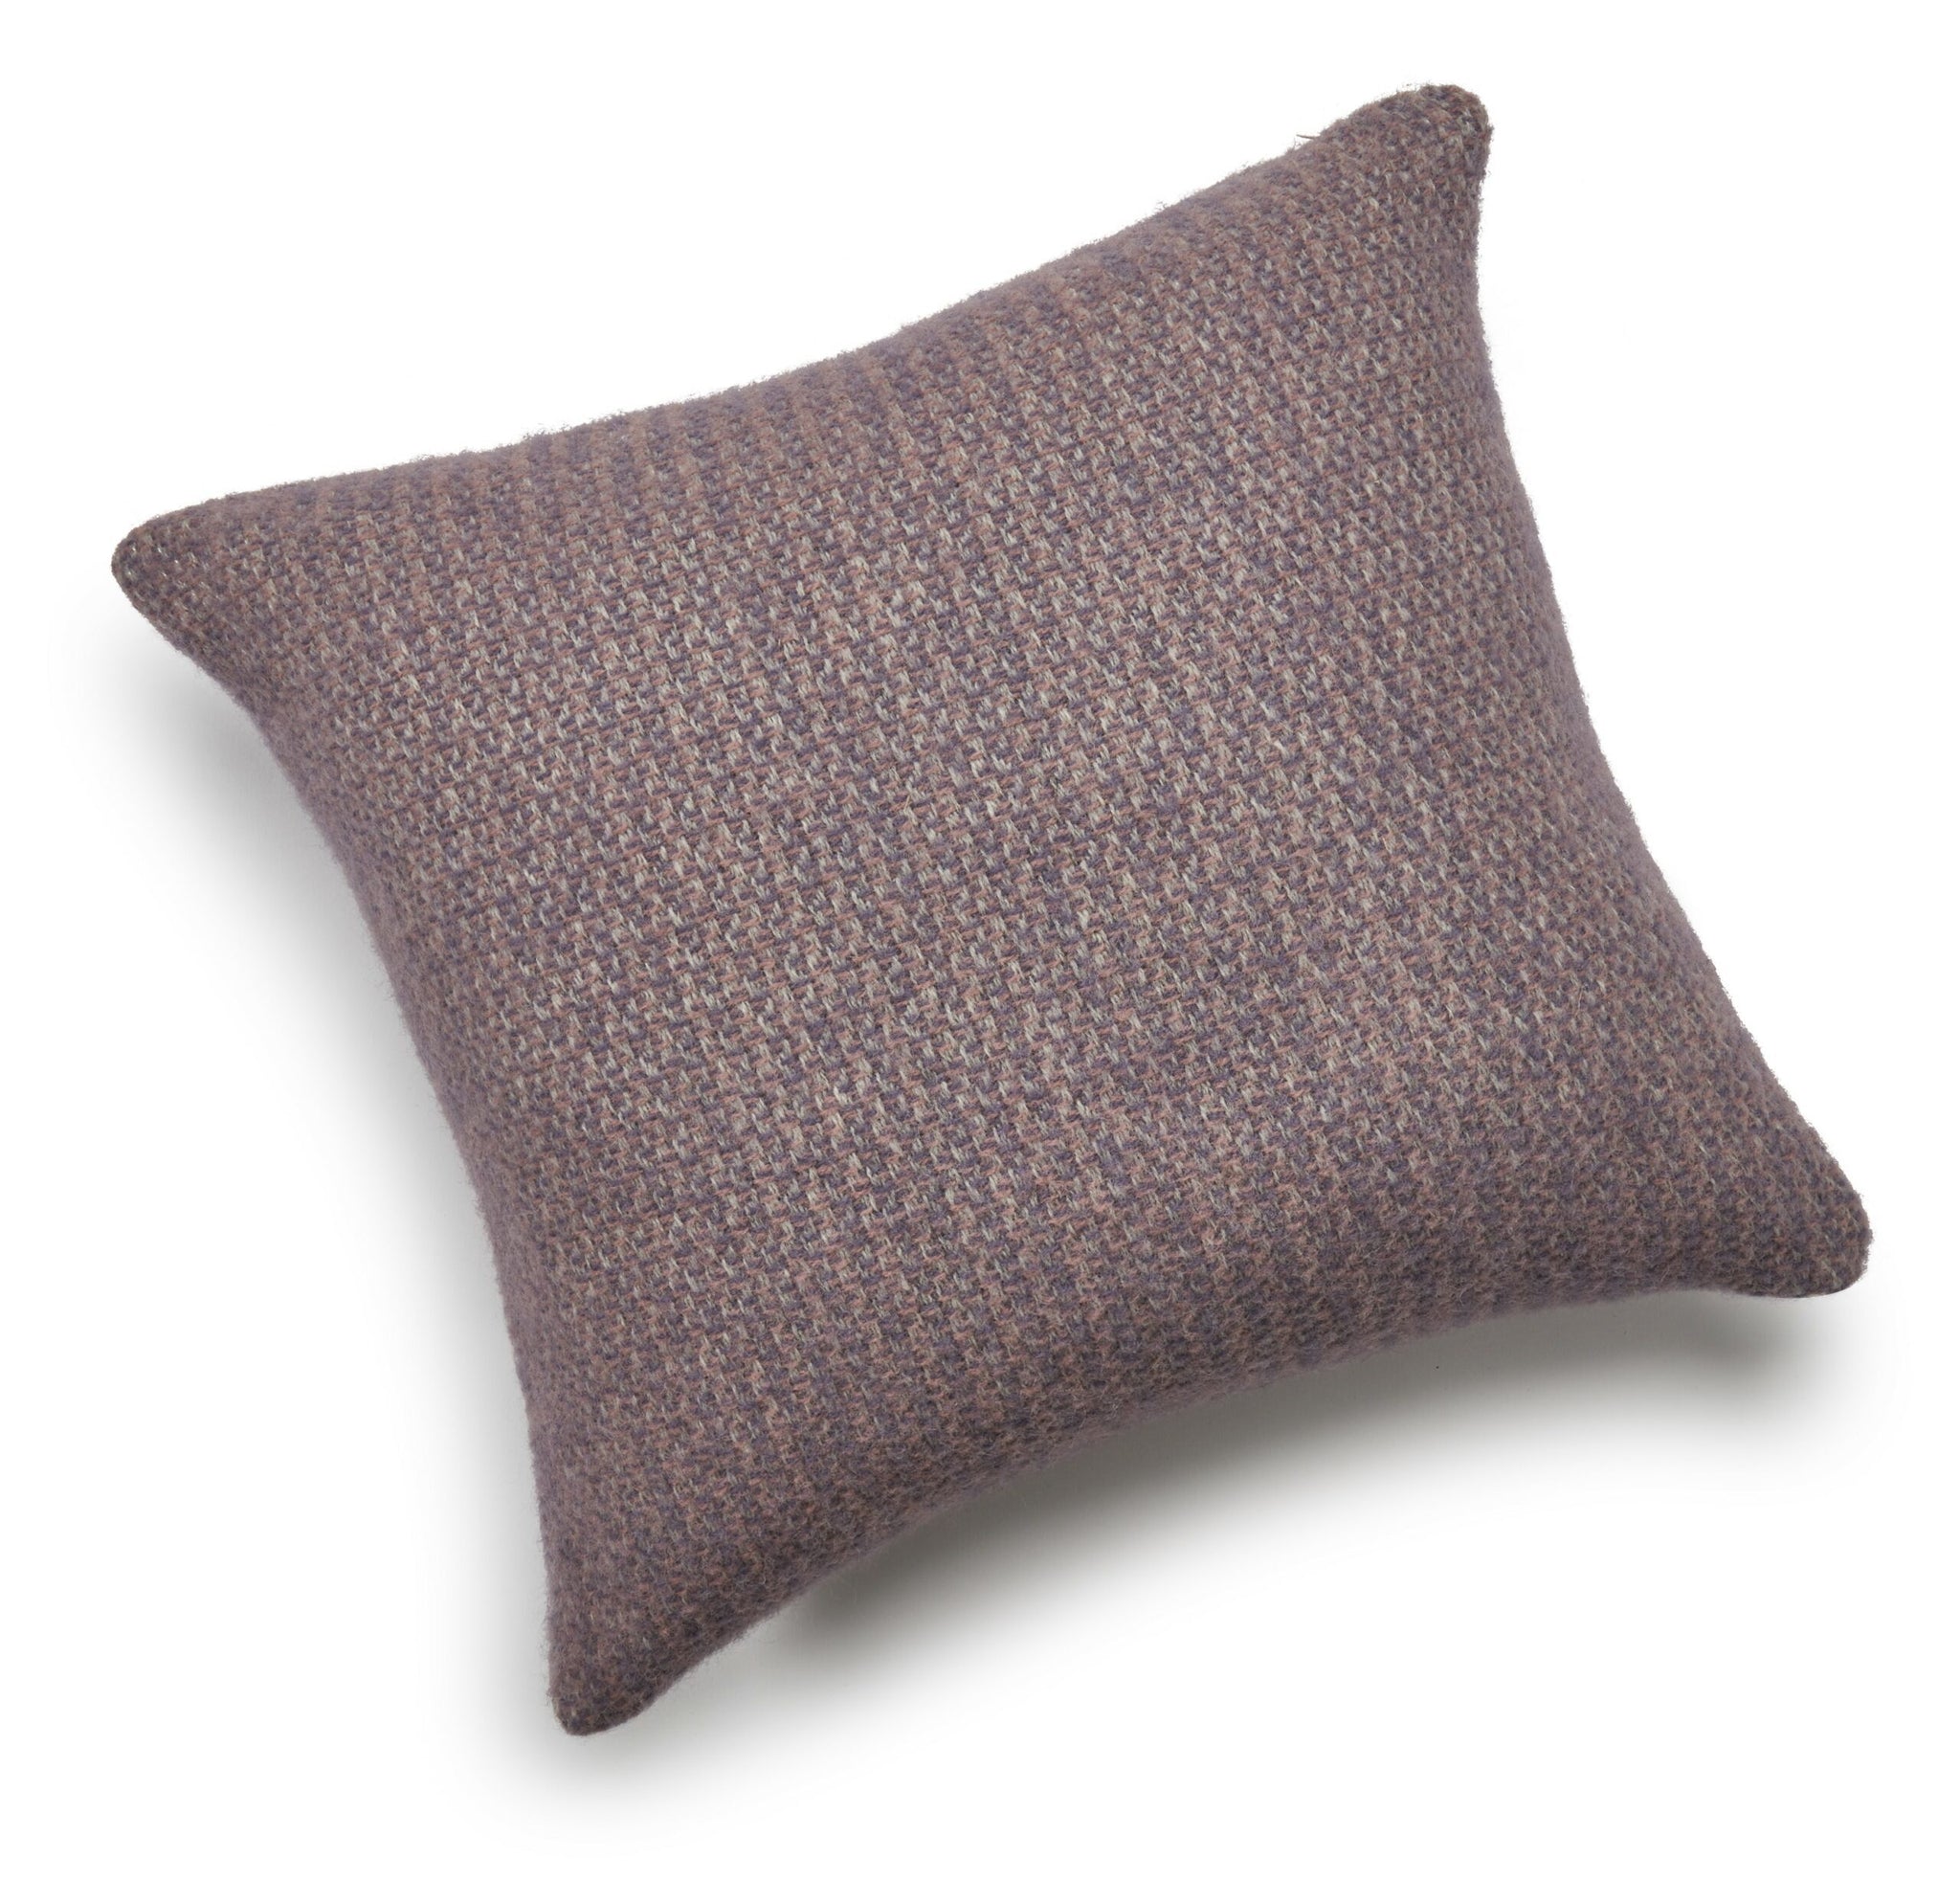 Brand new Tweedmill Lavender Illusion Wool Cushion